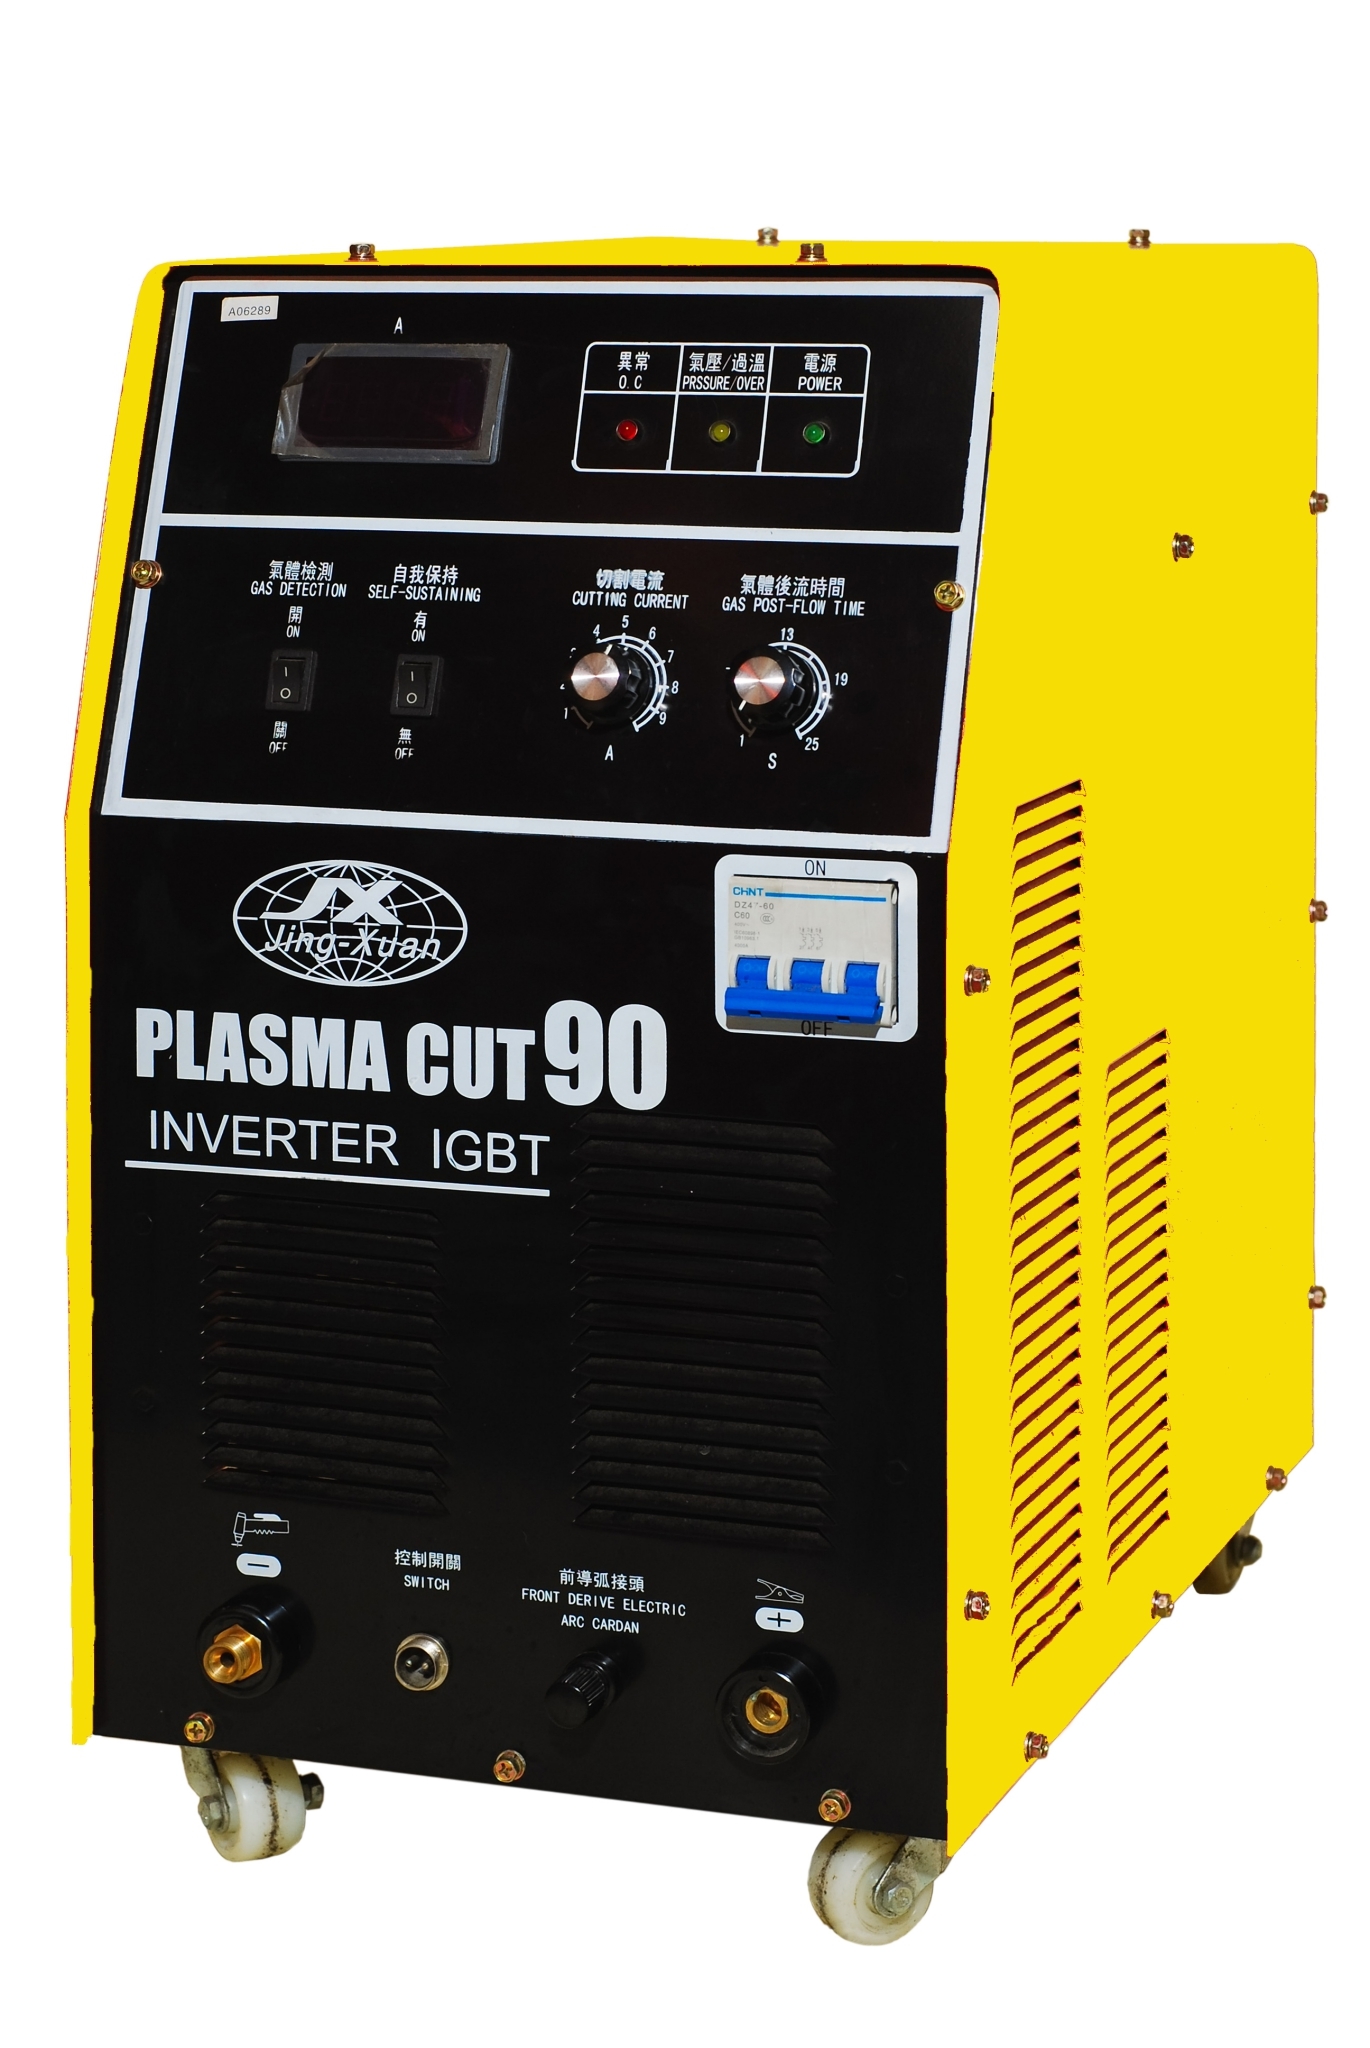 Plasma Cutting 90 